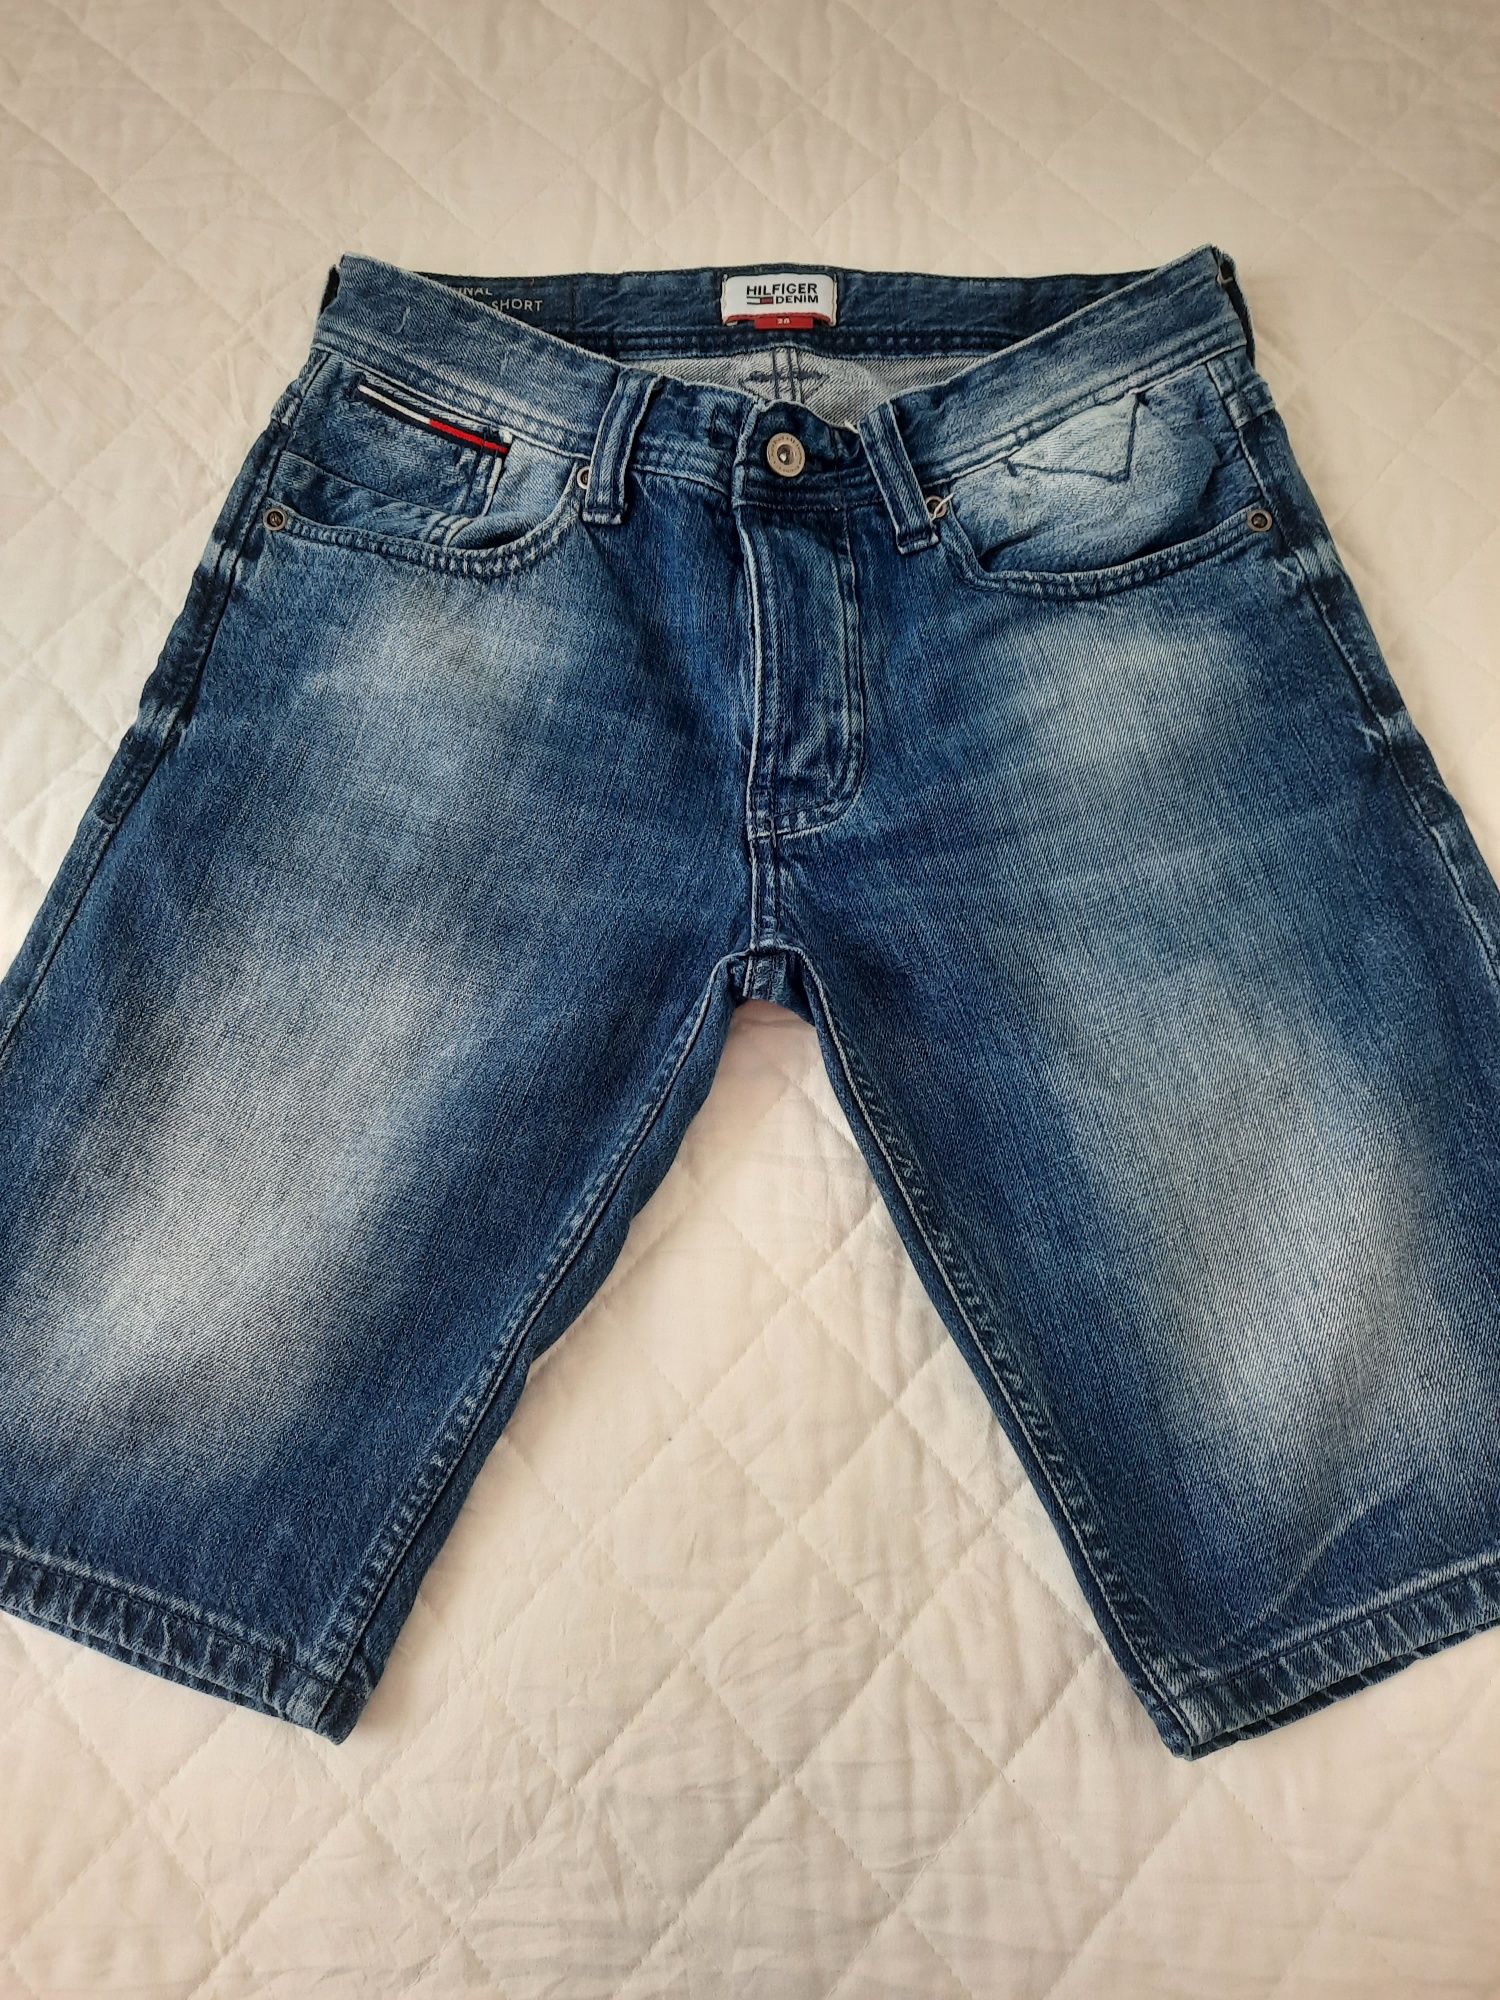 Spodnie krótkie,  Hlifigier R.28